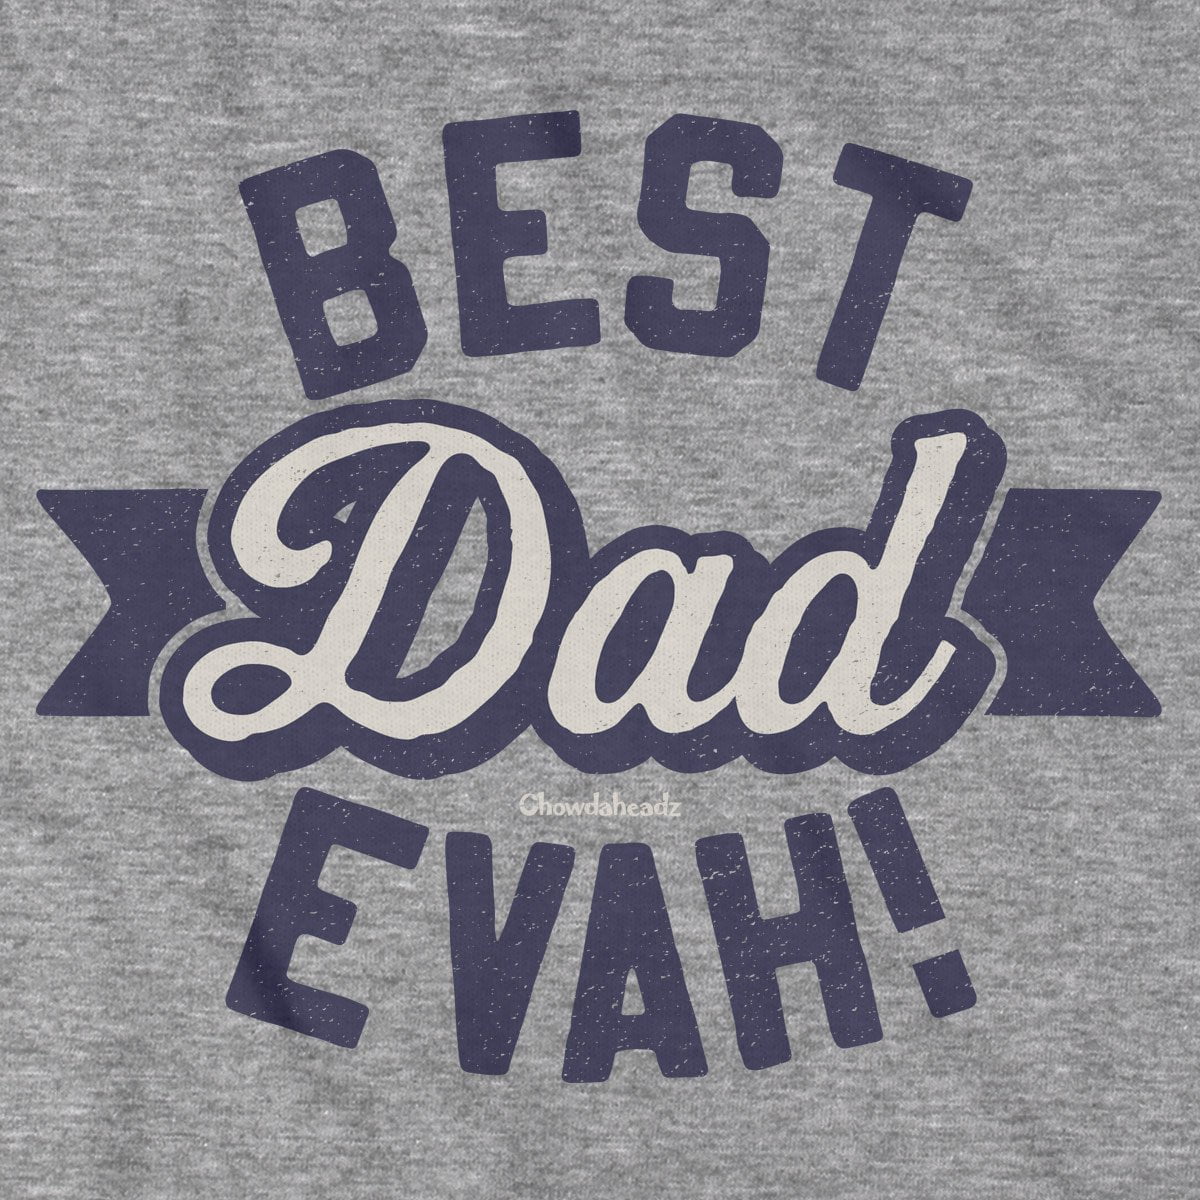 Best Dad Evah T-Shirt - Chowdaheadz